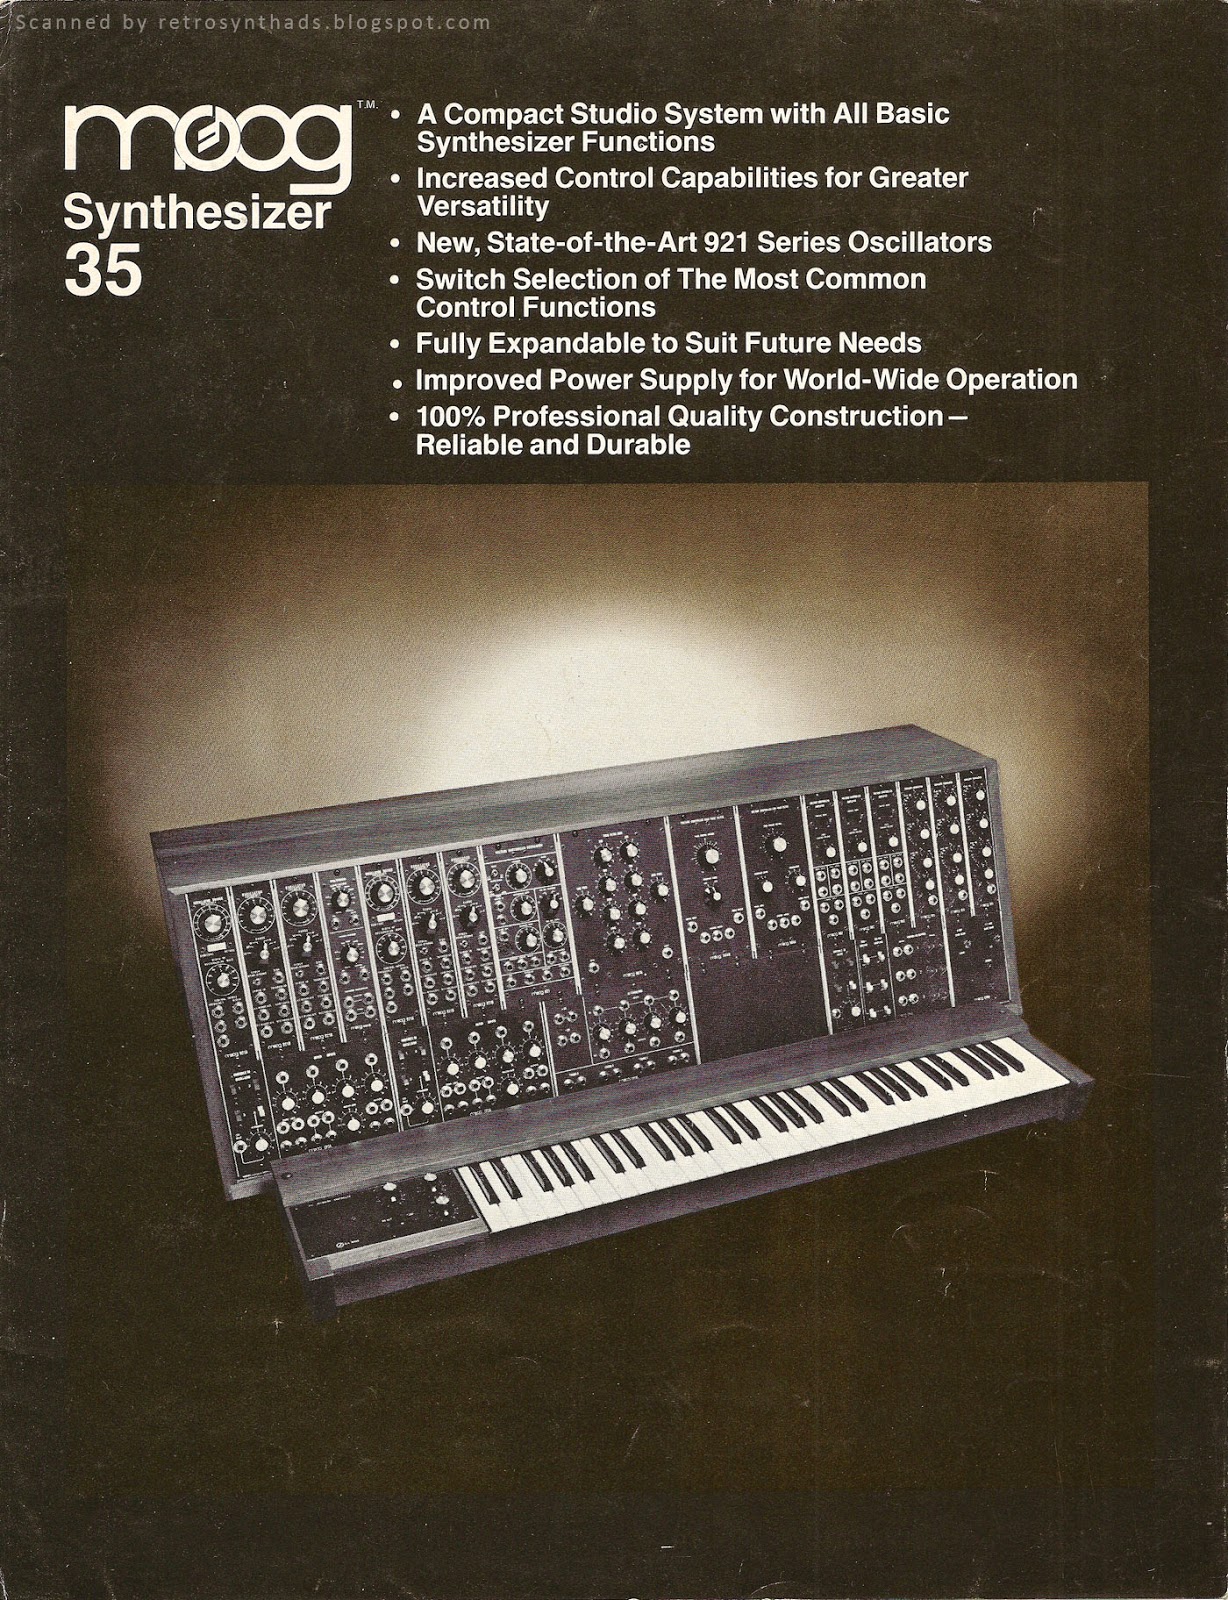 http://retrosynthads.blogspot.ca/2014/04/moog-synthesizer-35-modular-system-six.html